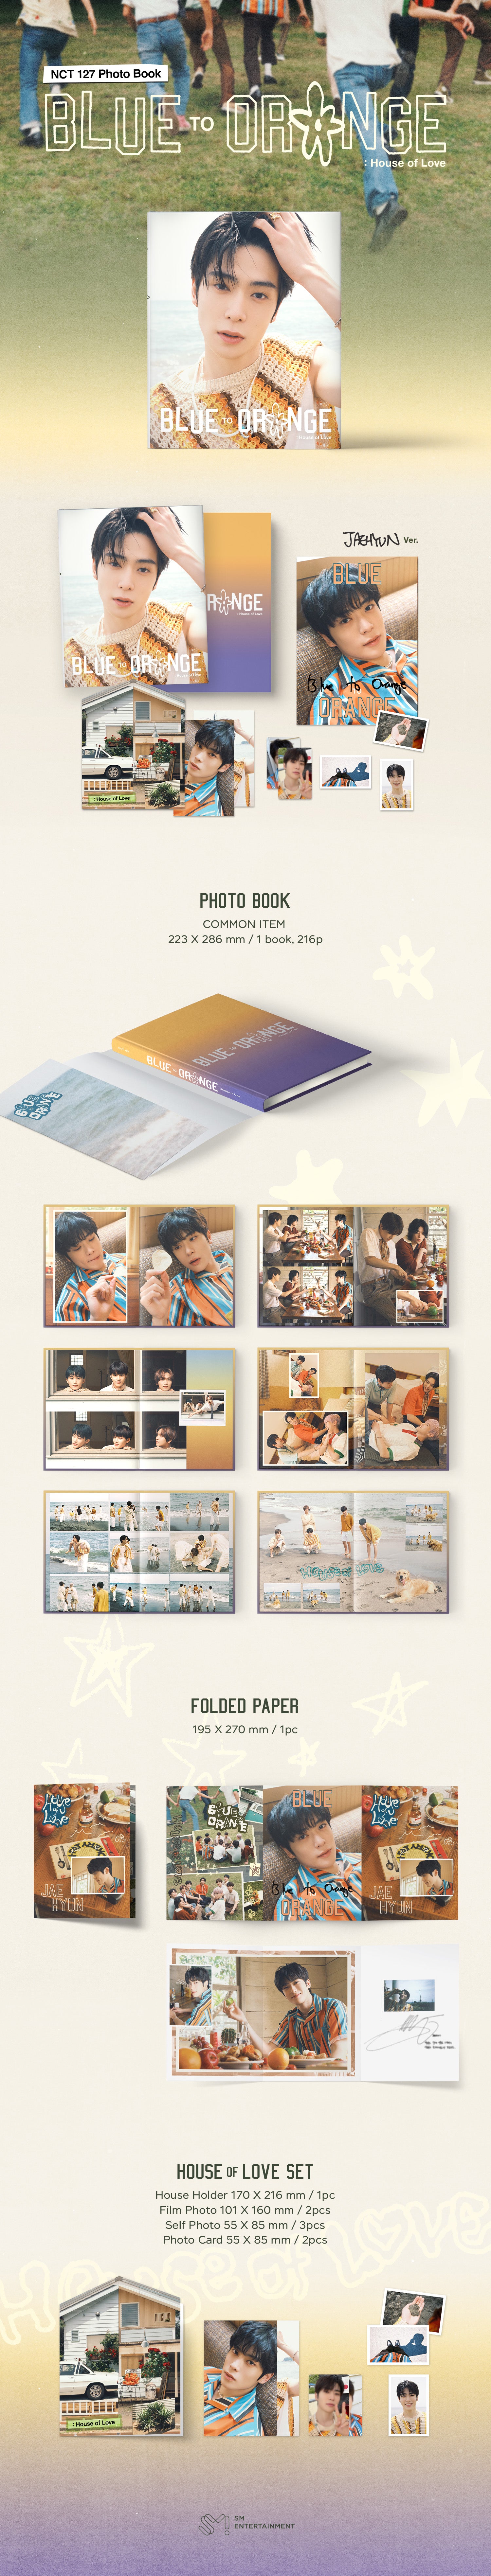 NCT 127 PHOTOBOOK 'BLUE TO ORANGE : HOUSE OF LOVE' JAEHYUN DETAIL